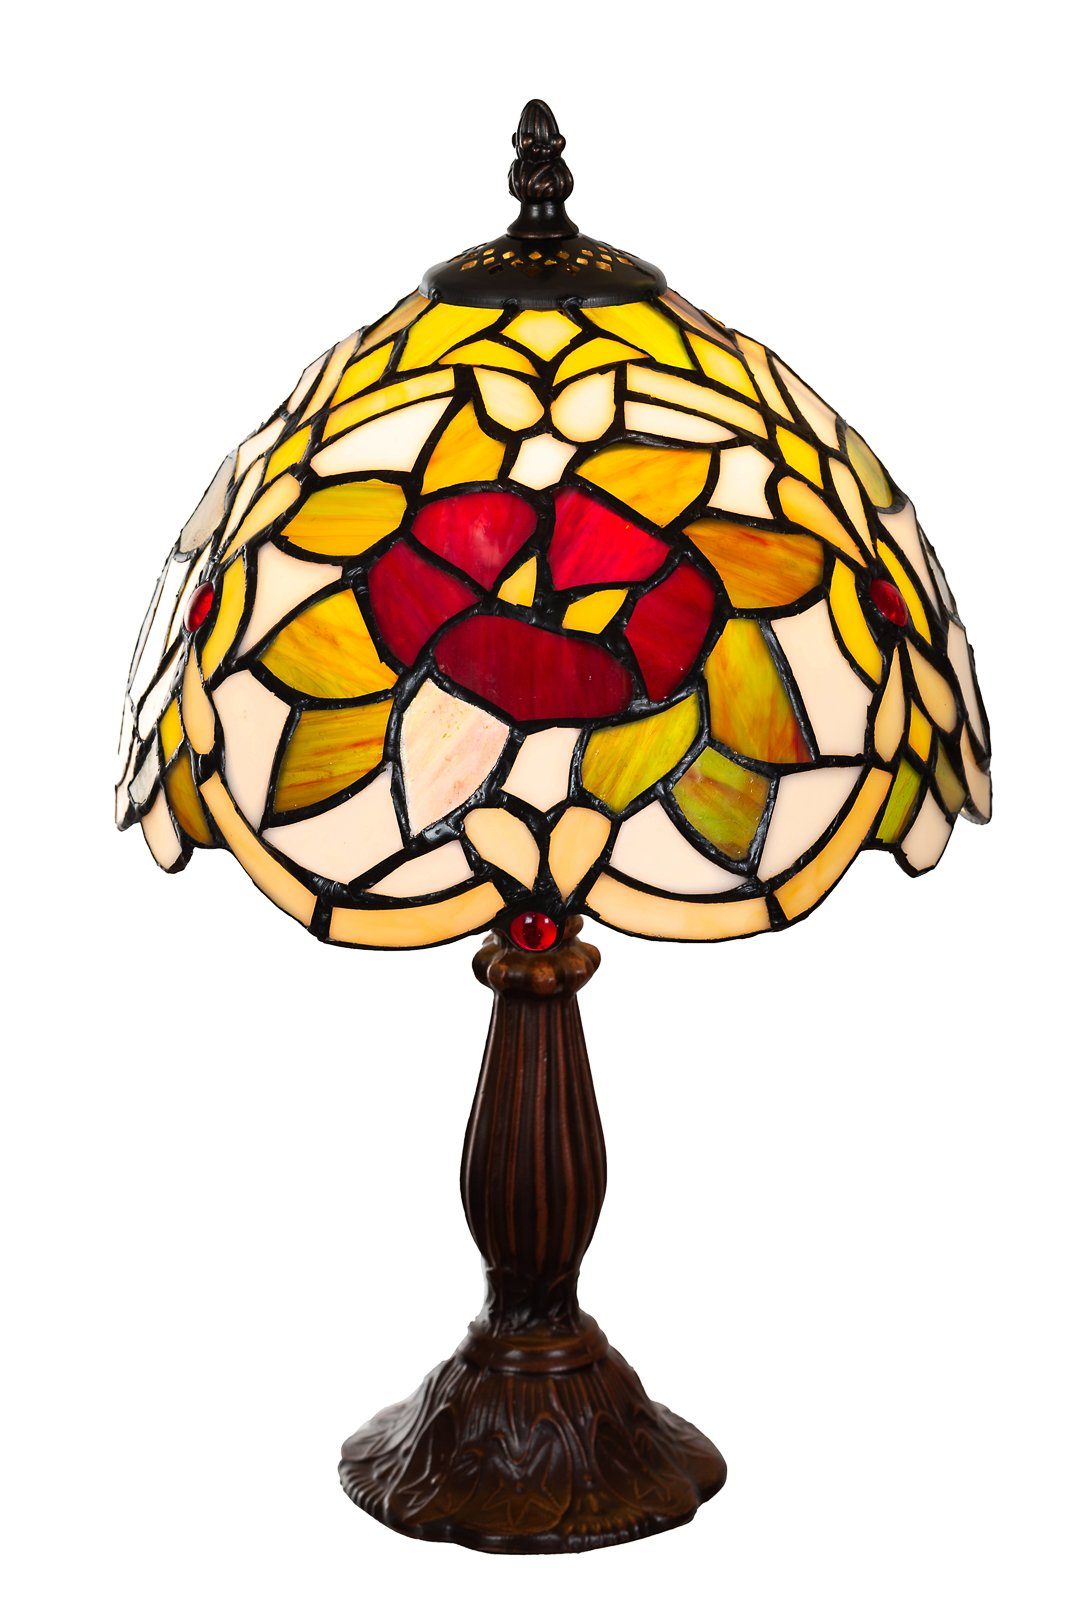 BIRENDY Stehlampe Tischlampe Tiffany Style Blume Tiff148 Motiv Lampe Dekorationslampe